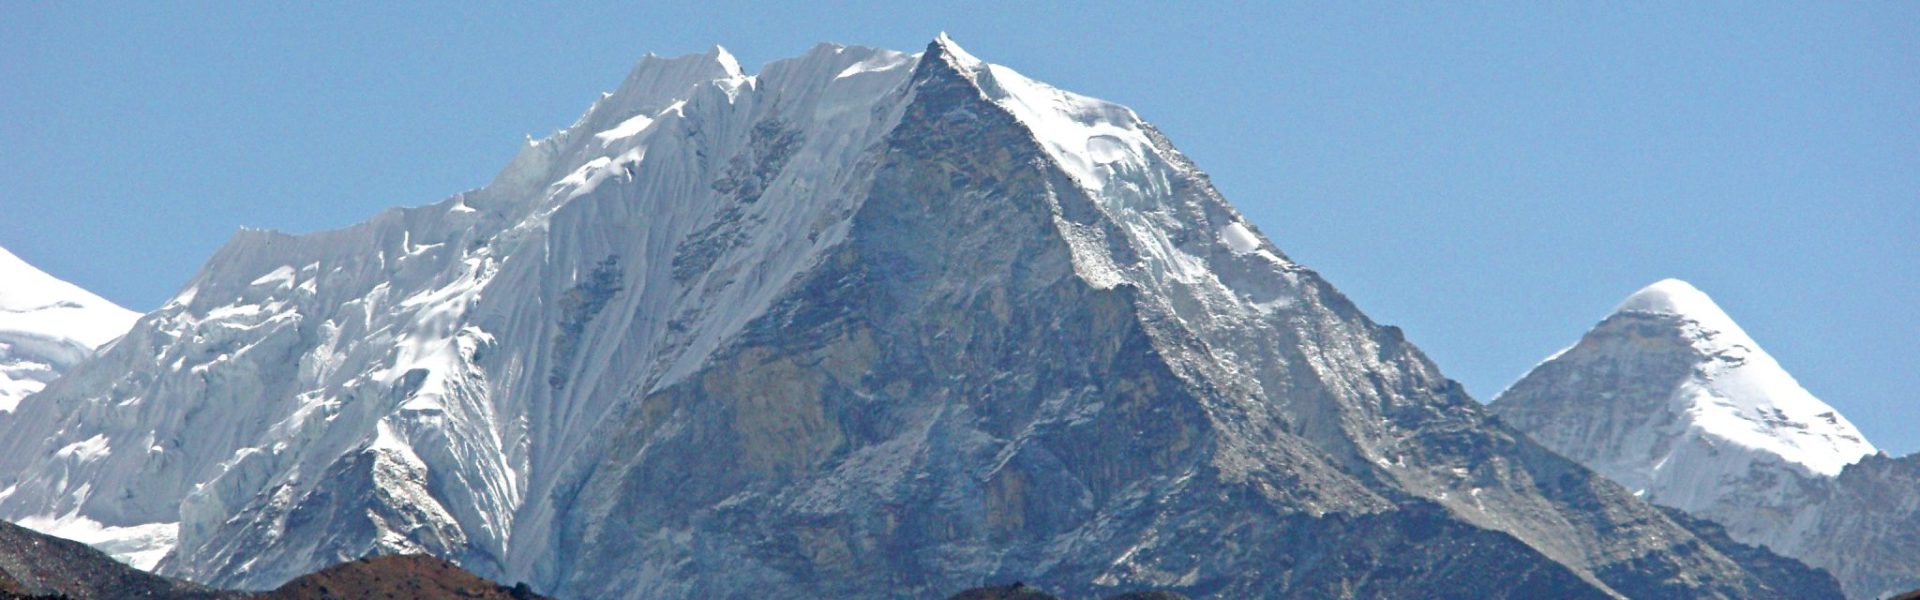 Island peak via Everest Base Camp